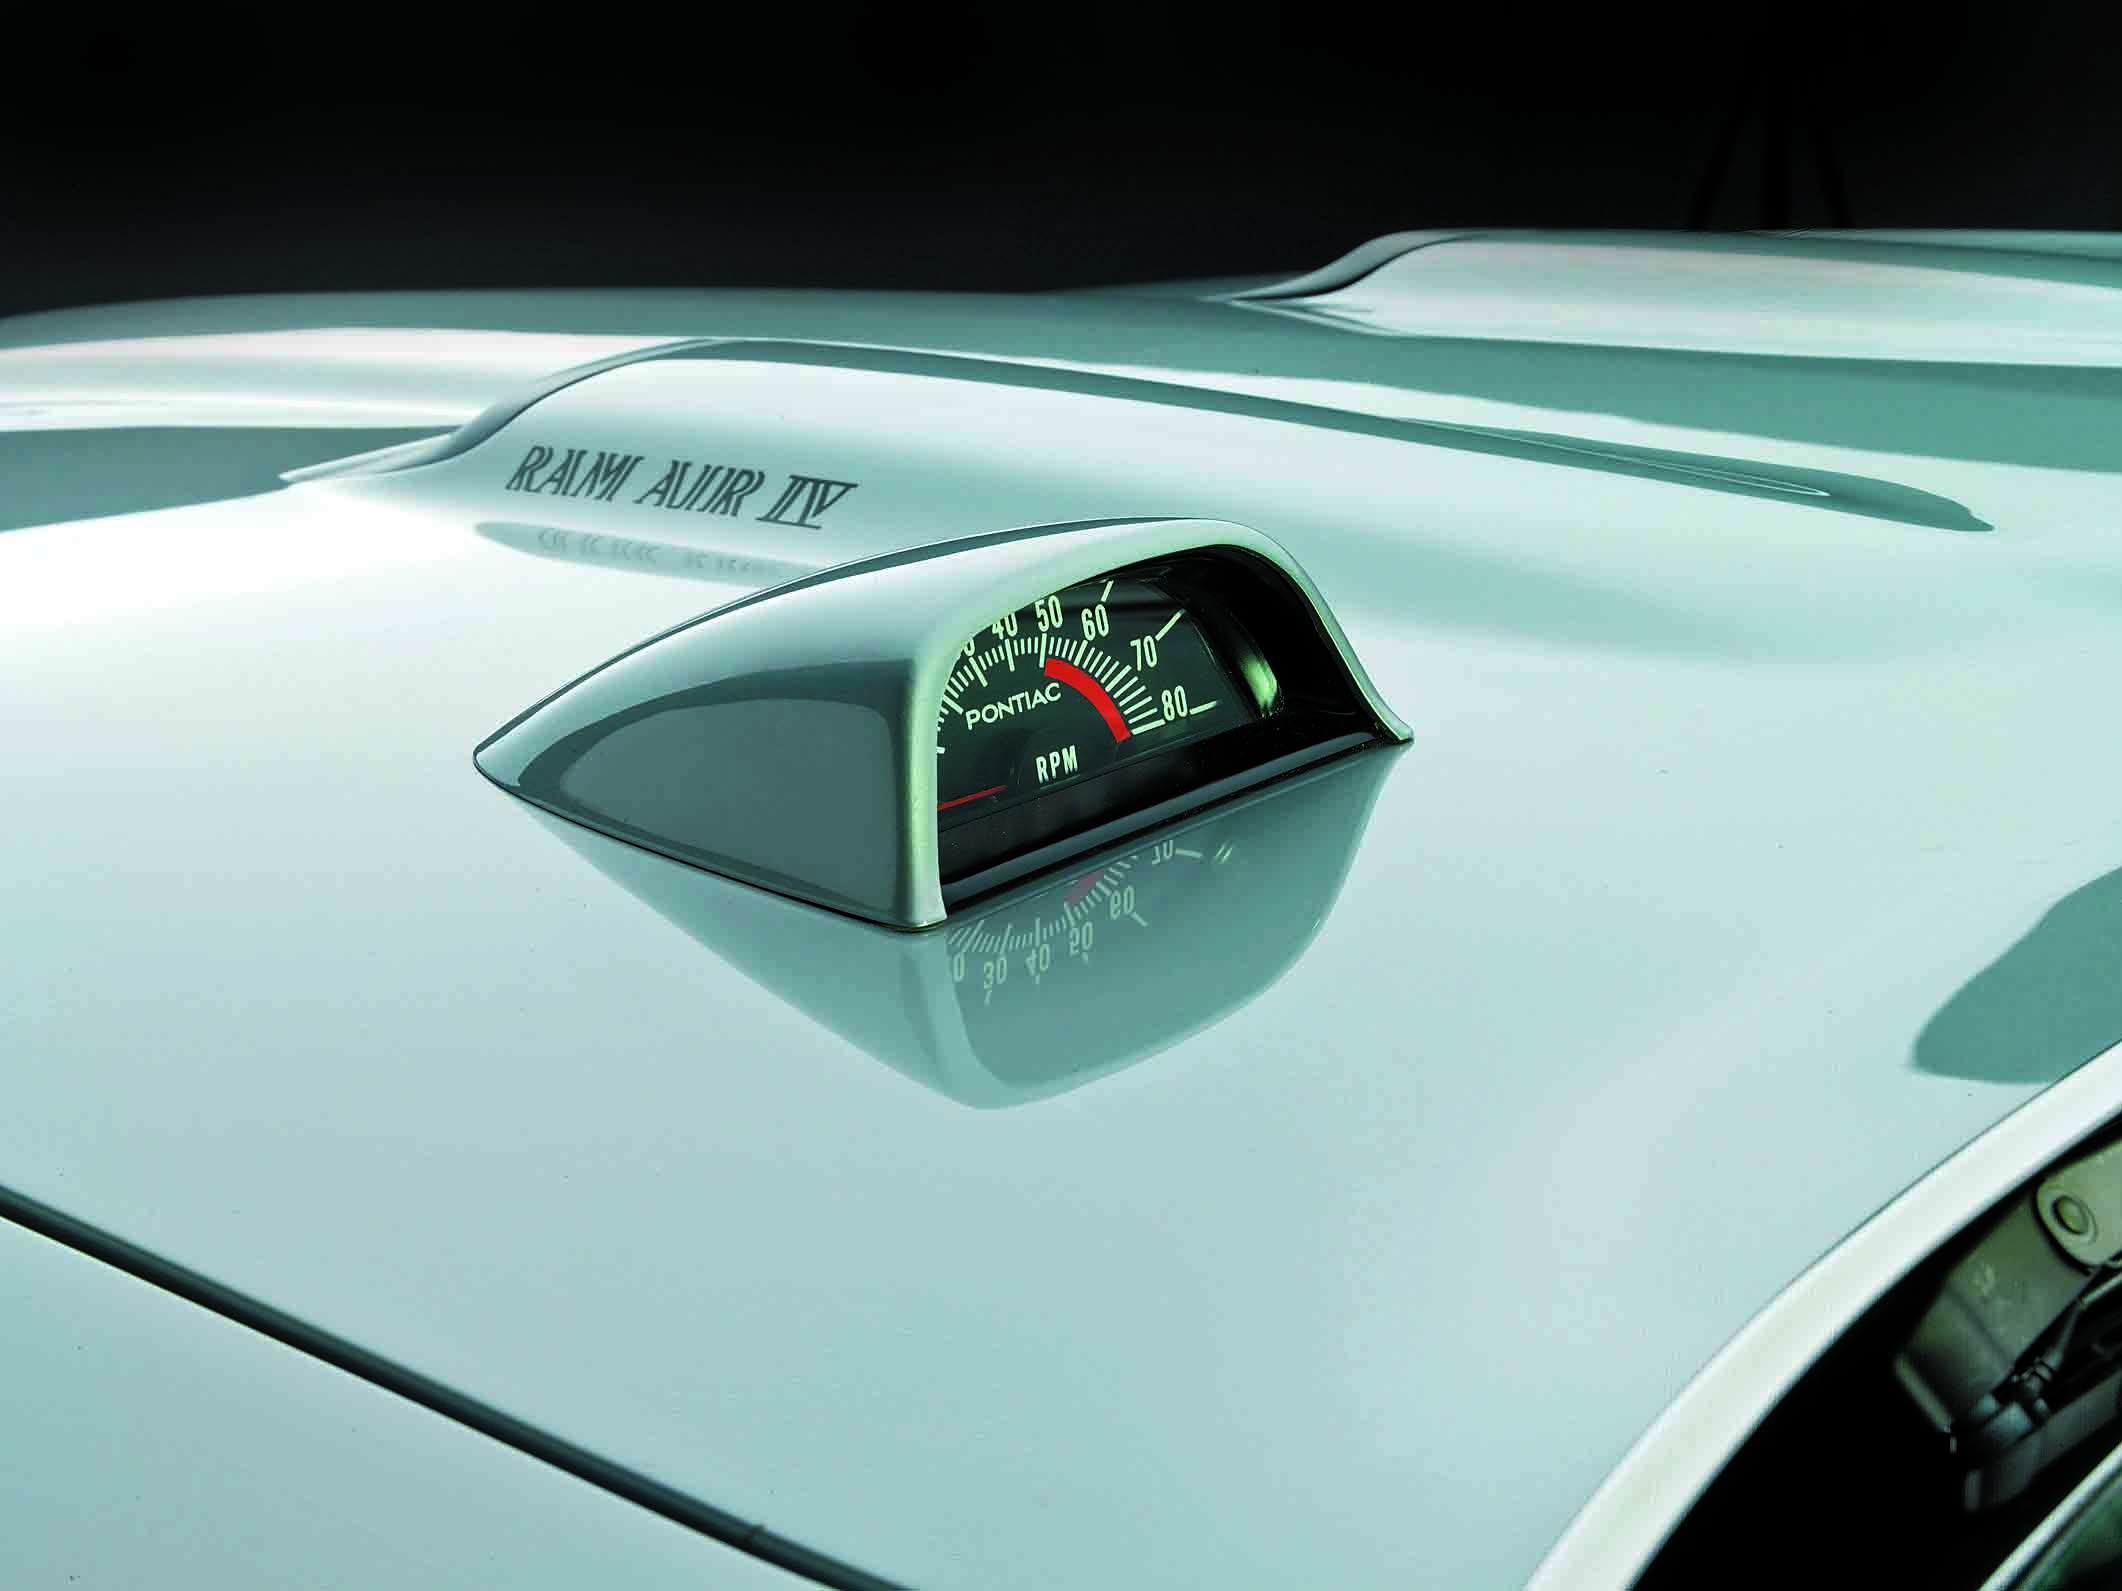 Pontiac GTO Judge Conv. Ram Air IV tach detail.jpg